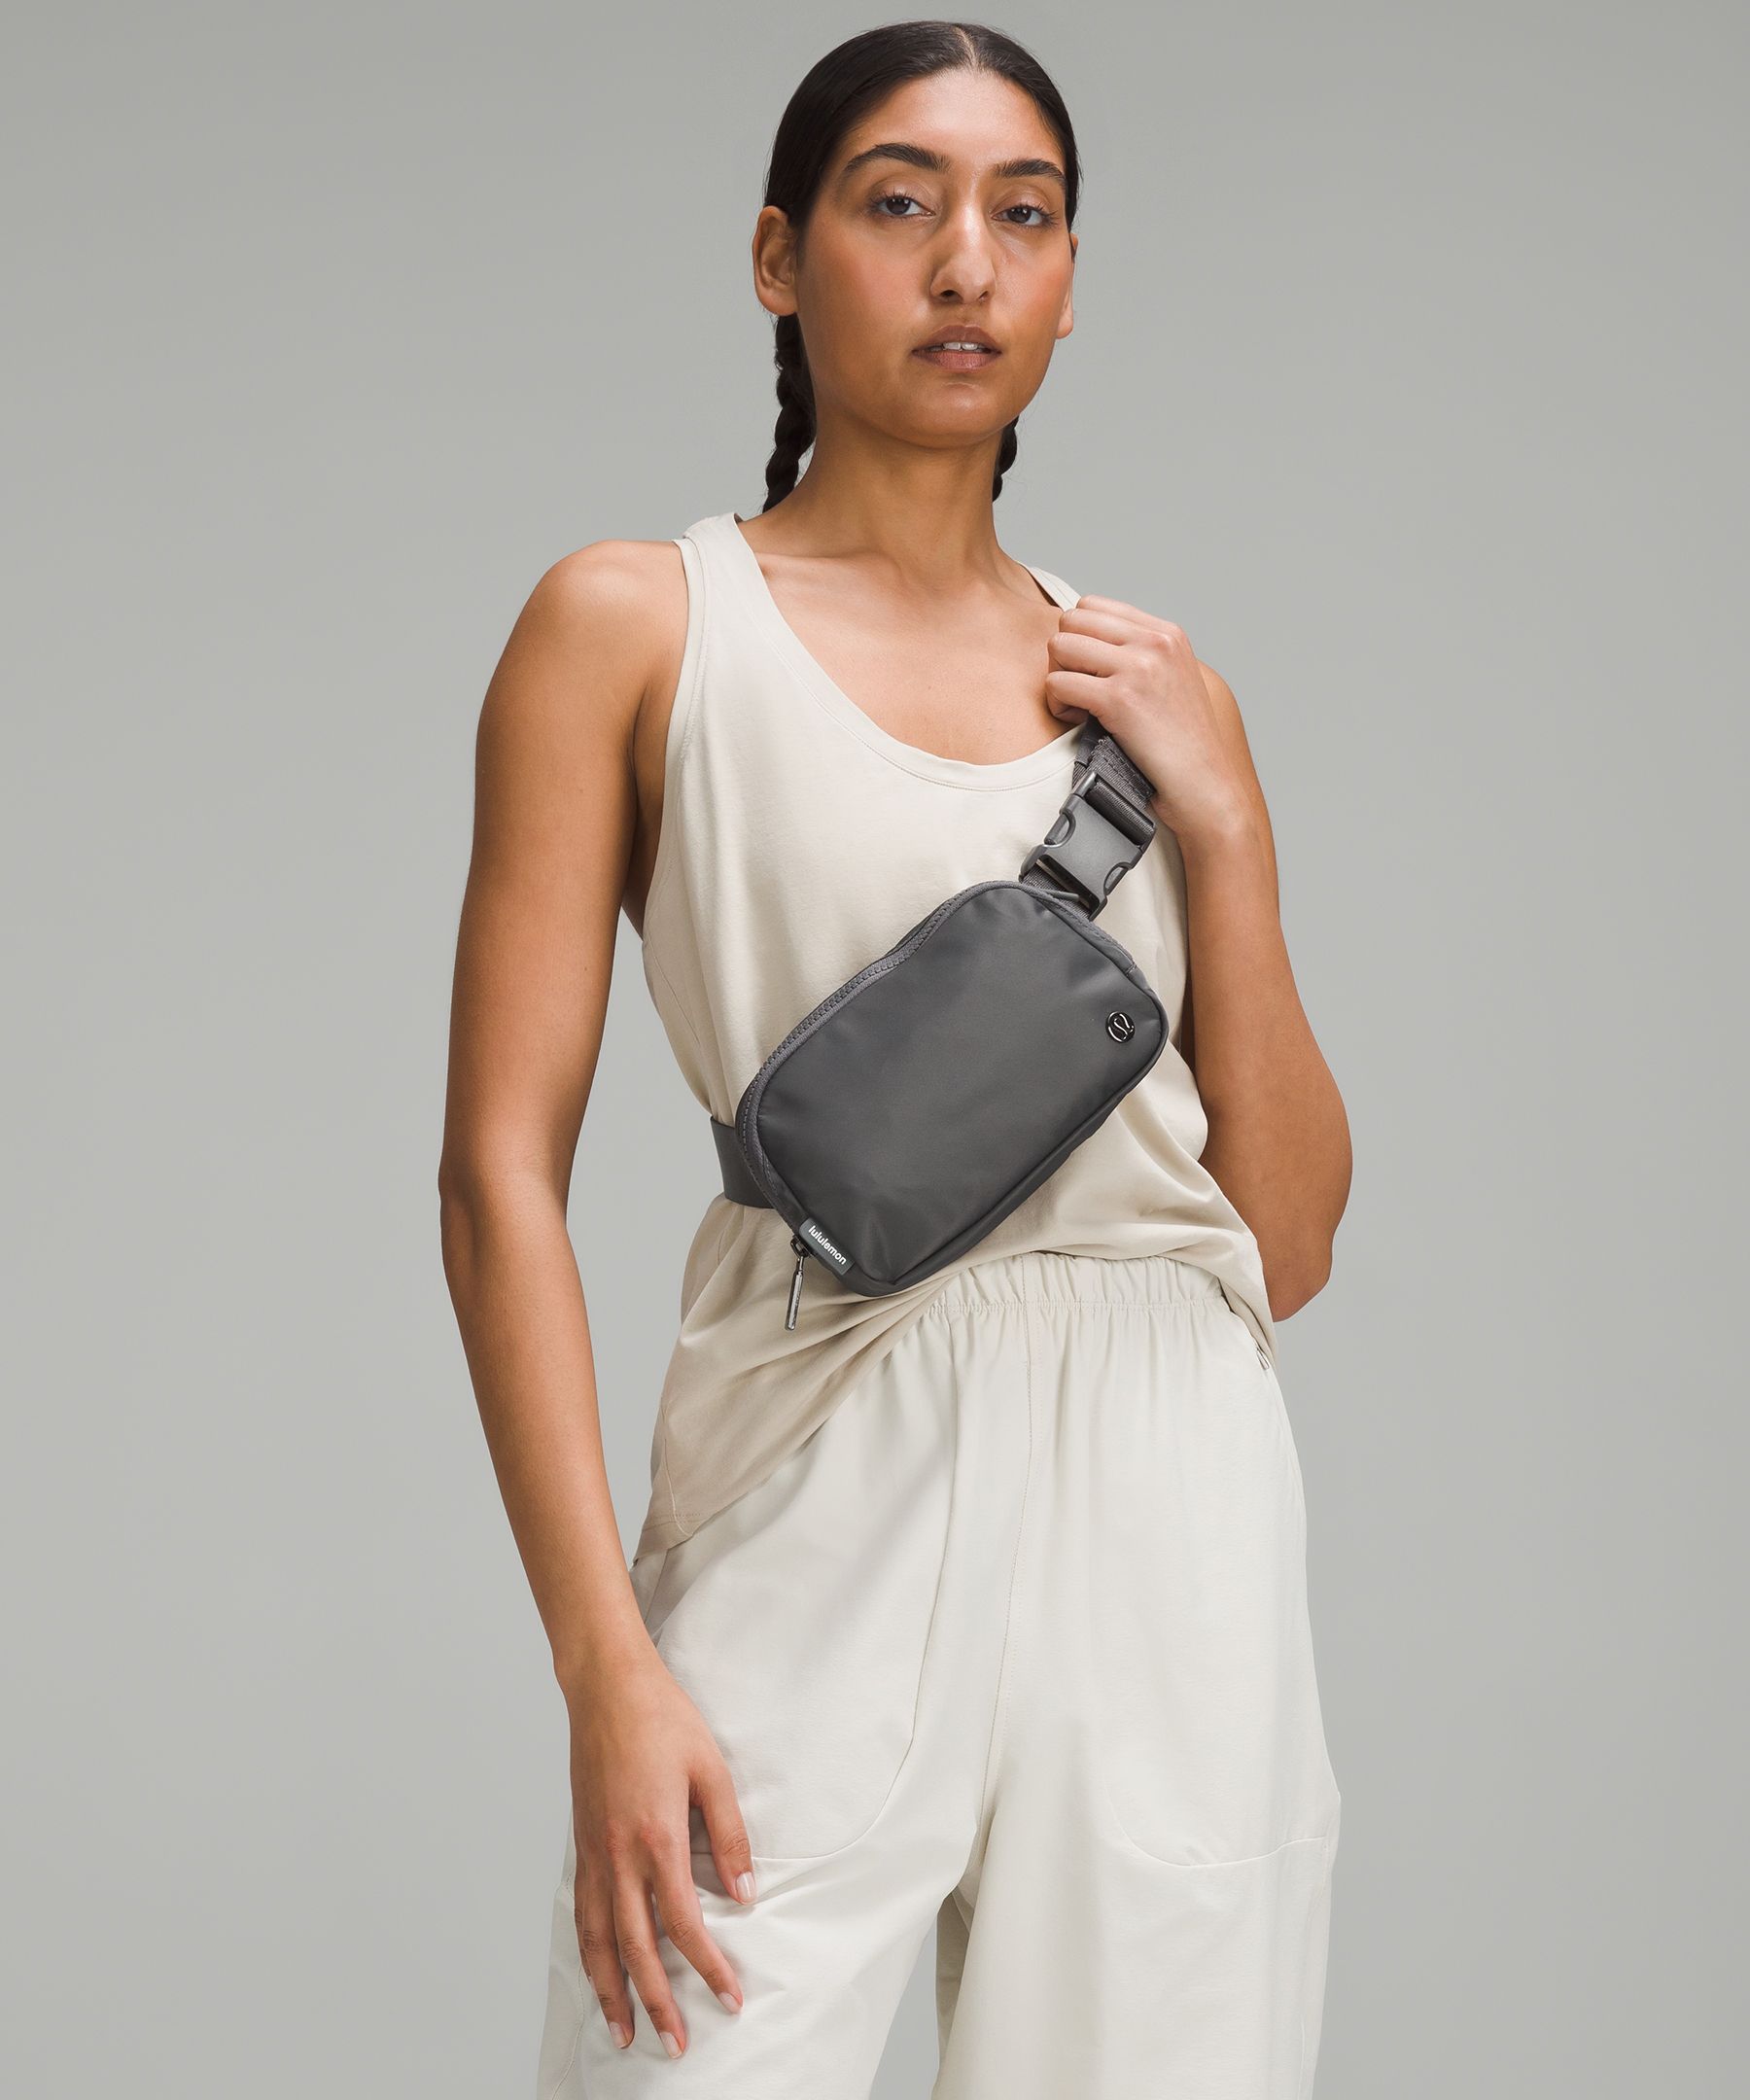 Belt Bag for Women Fanny Pack Dupes, Fashion Crossbody Lulu Waist